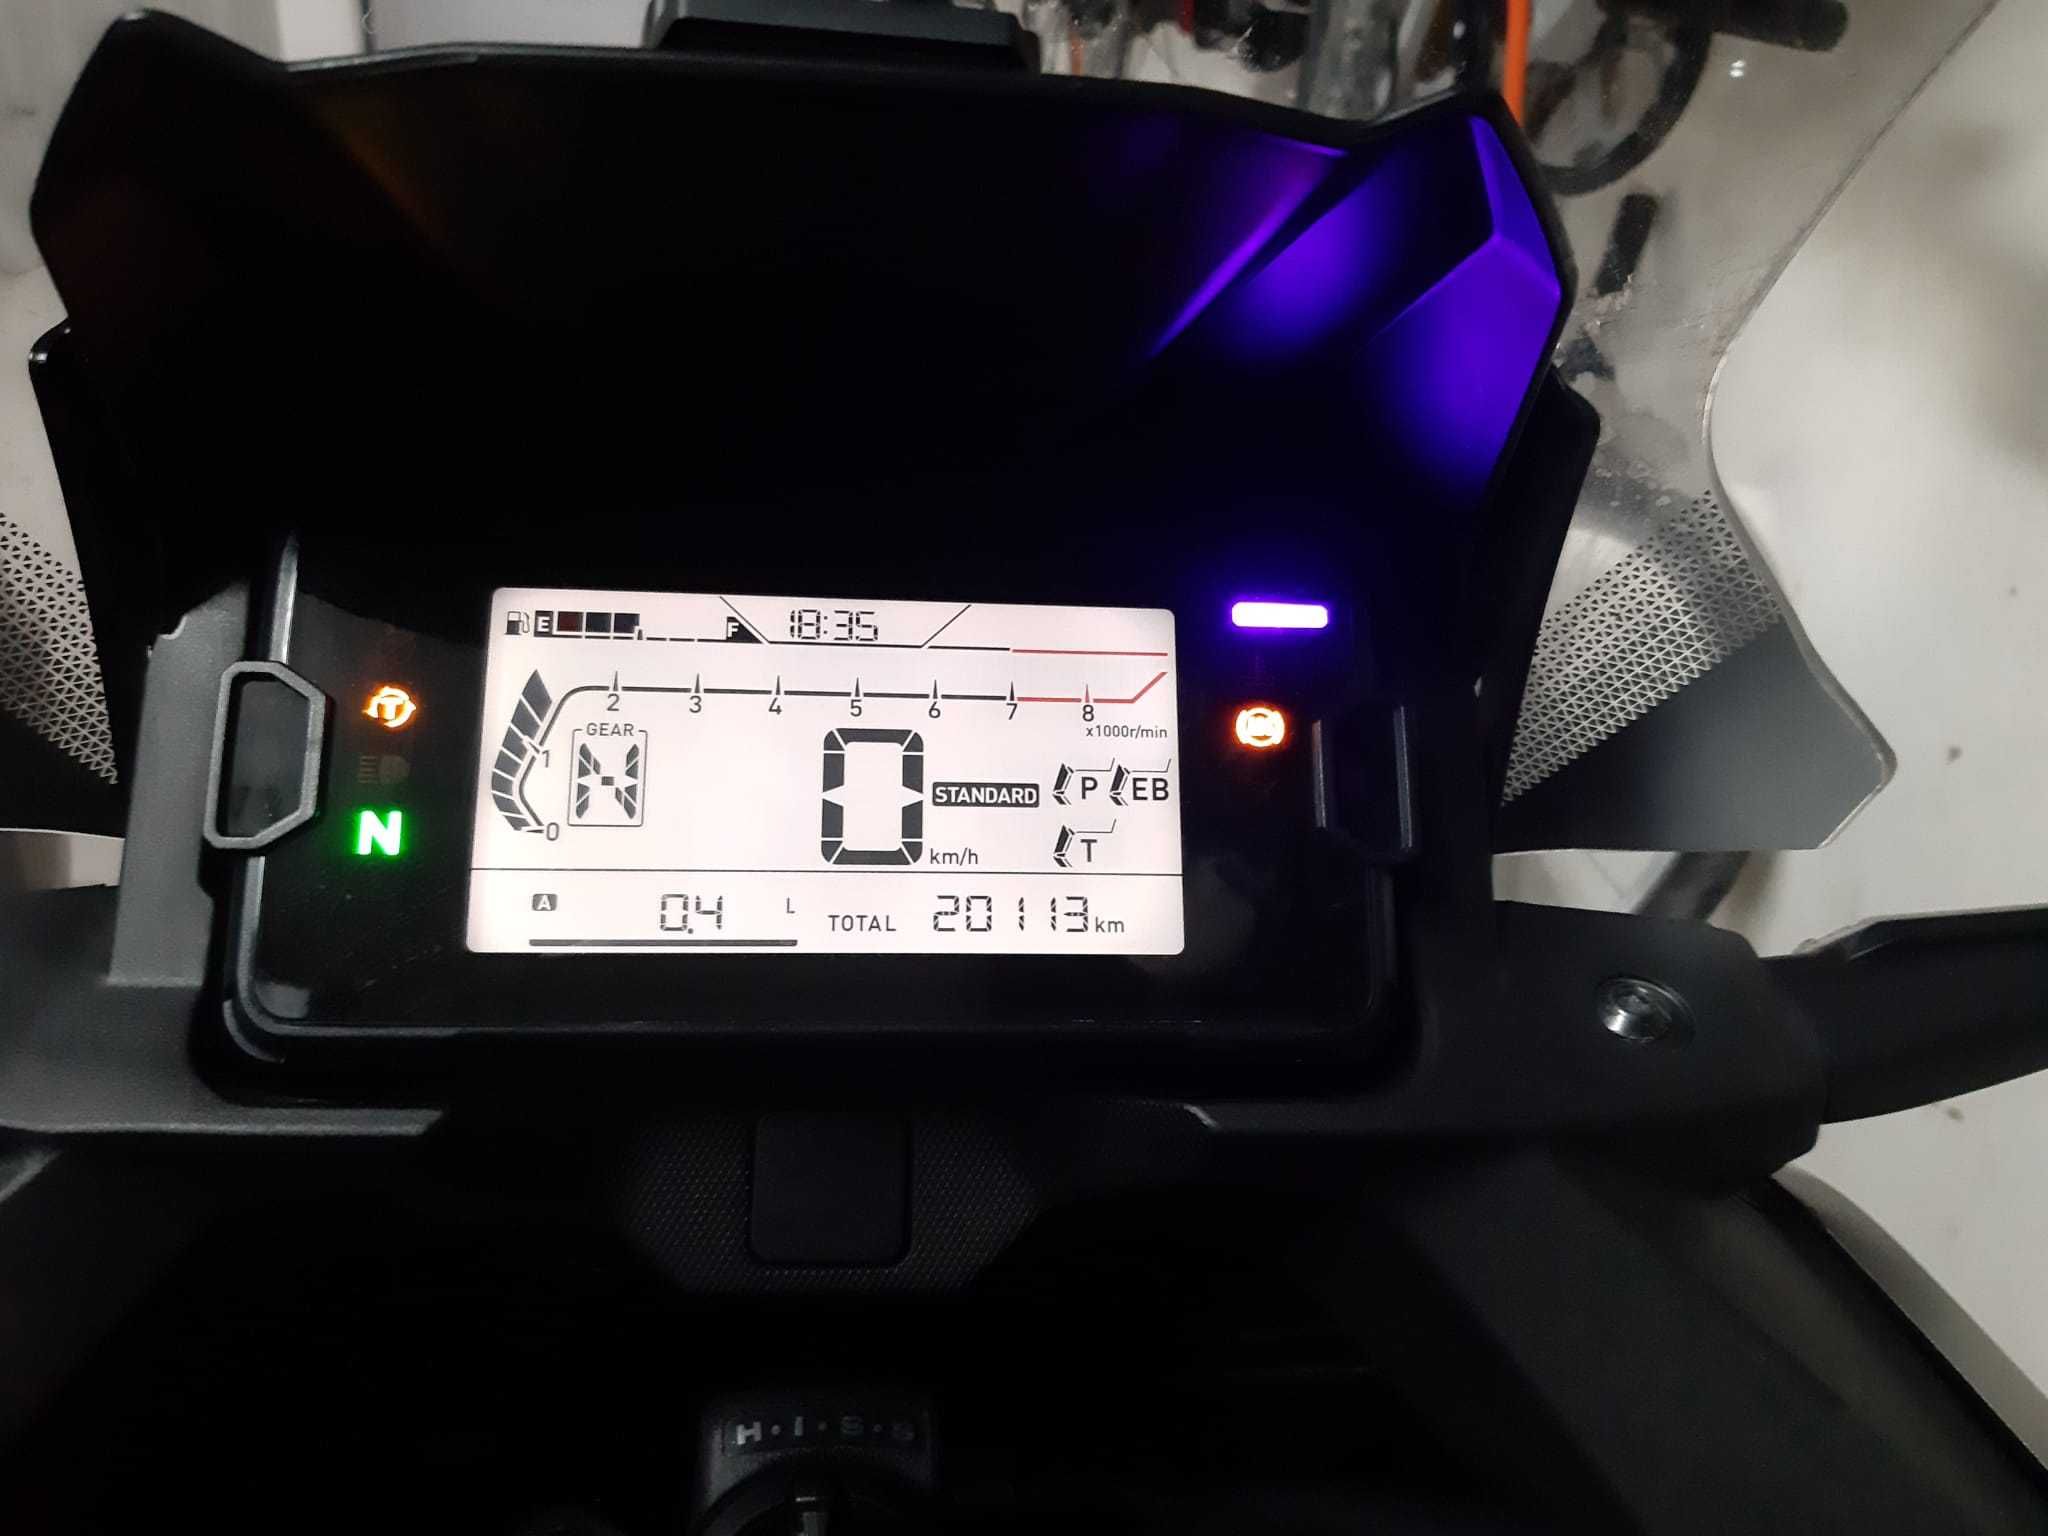 Moto Honda NC750 X DCT 2021